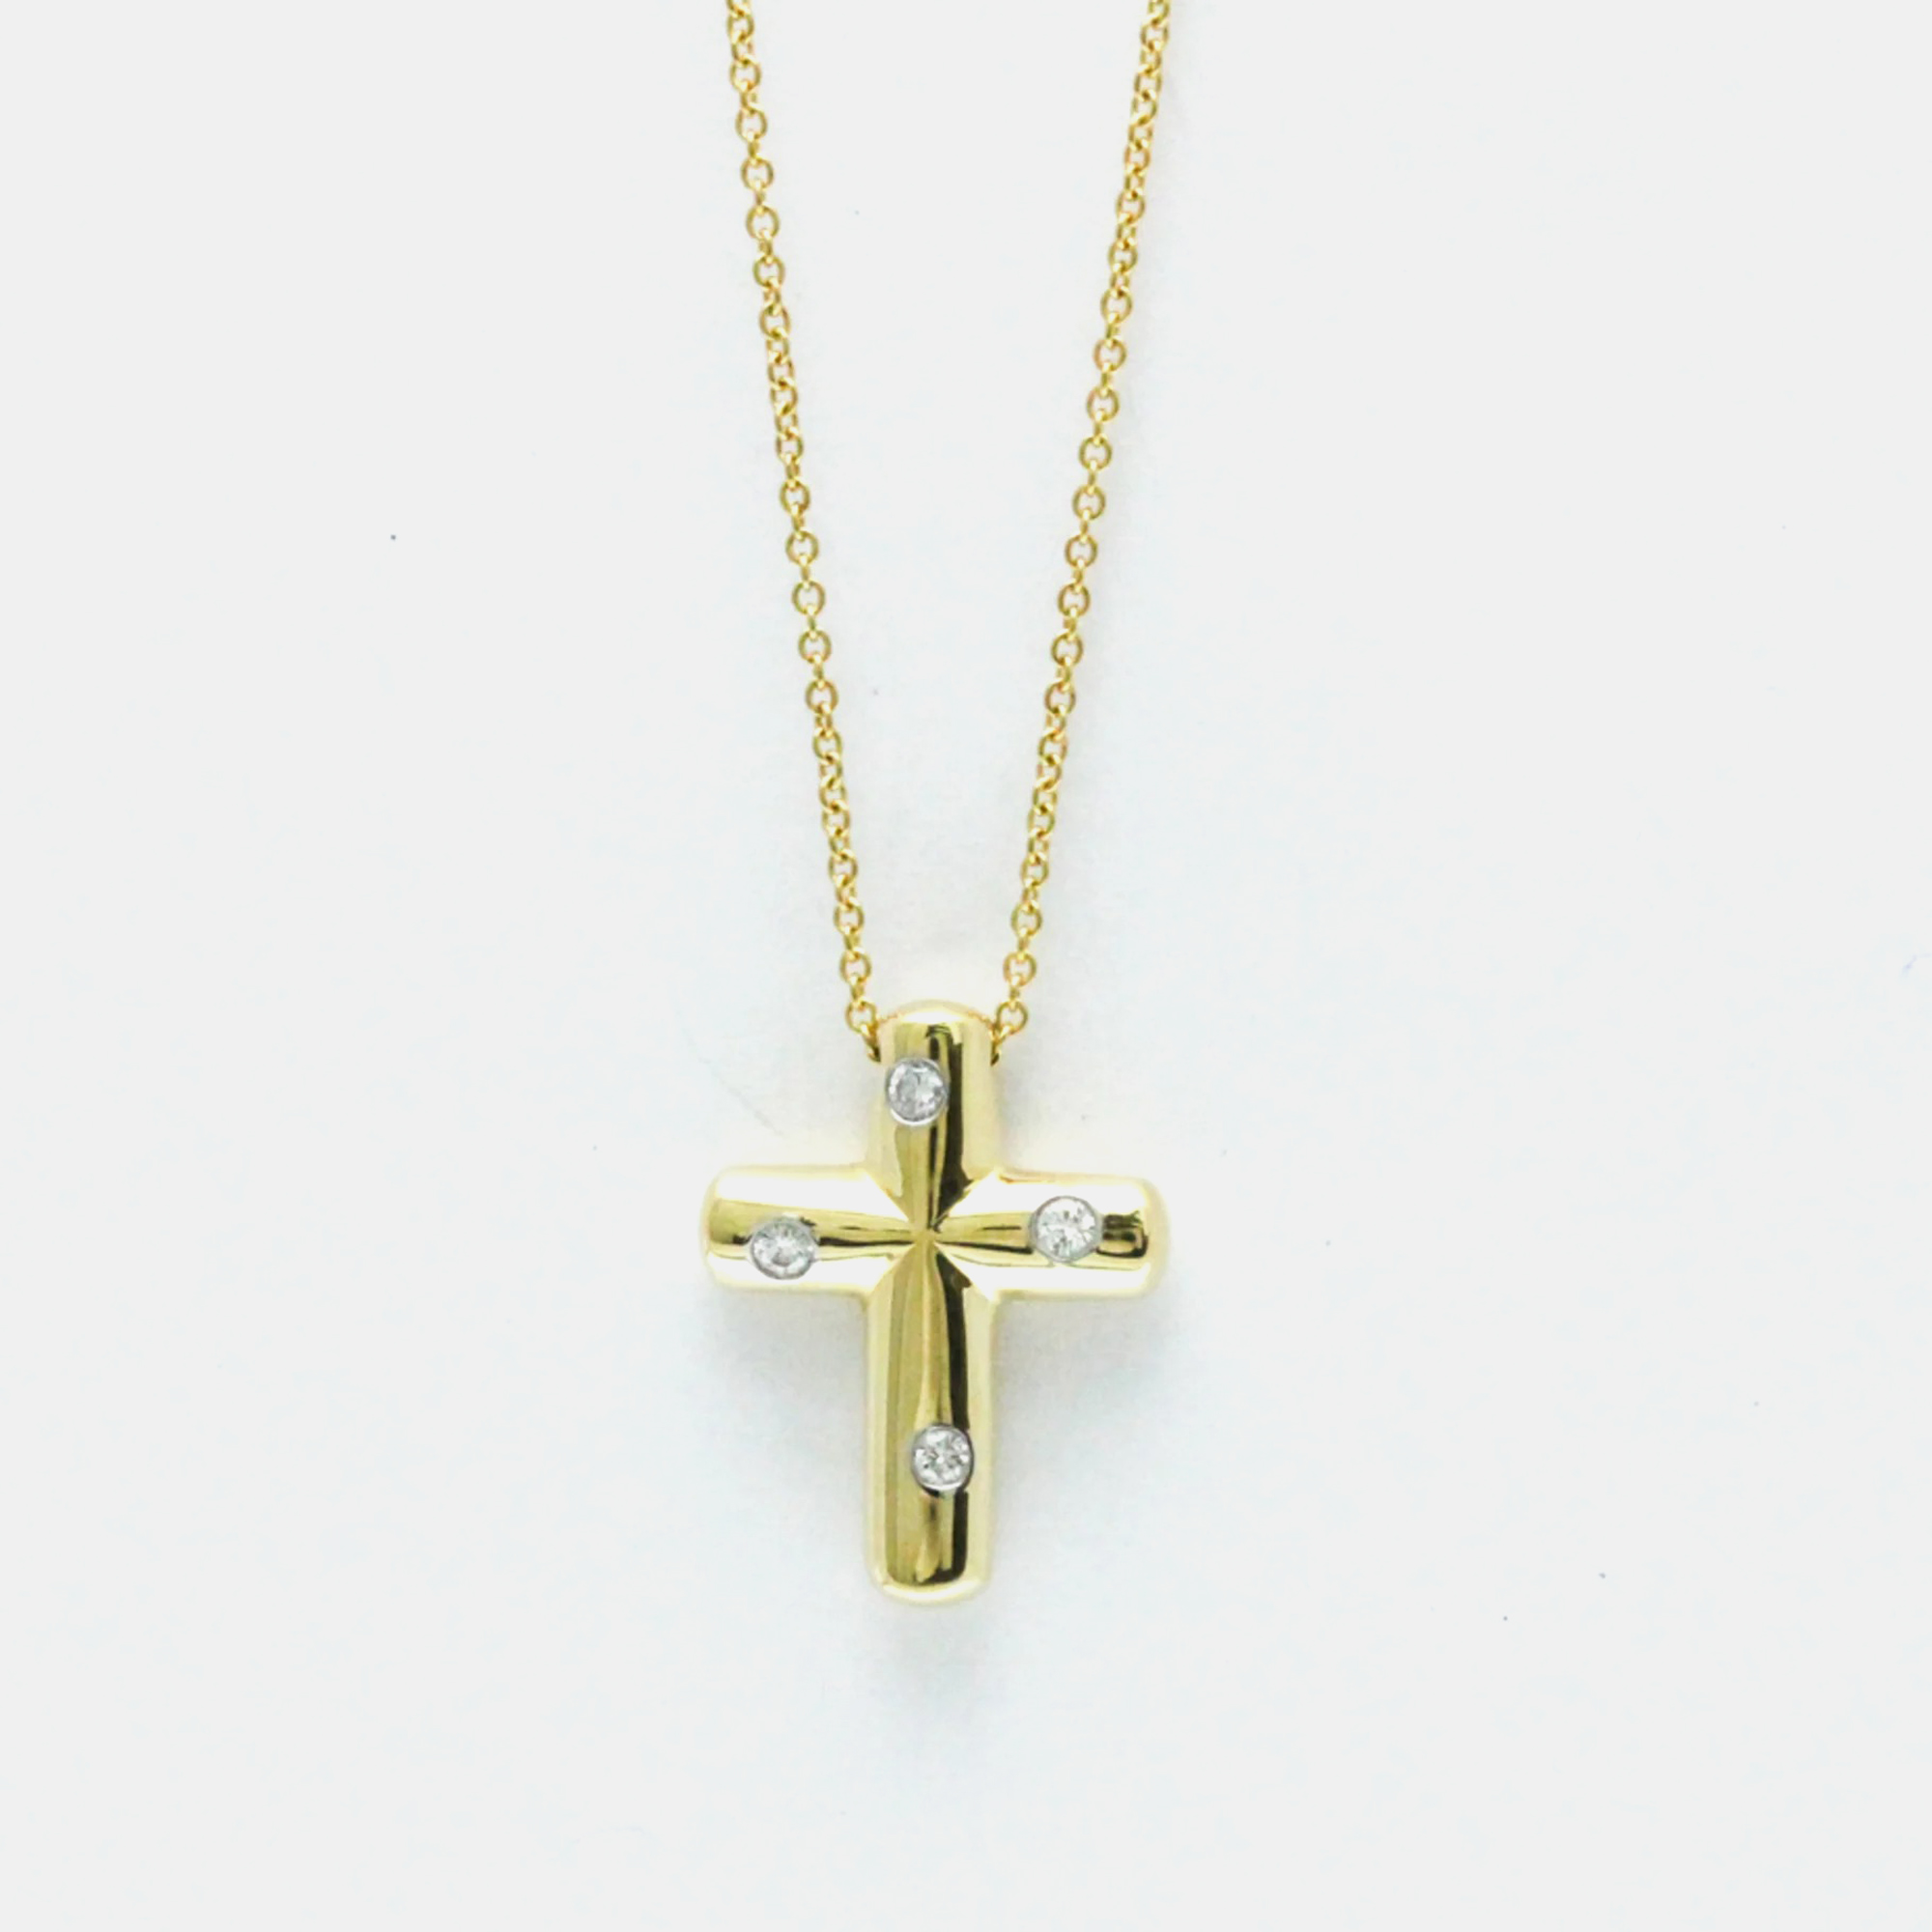 Tiffany & co. 18k yellow gold and diamond etoile cross pendant necklace